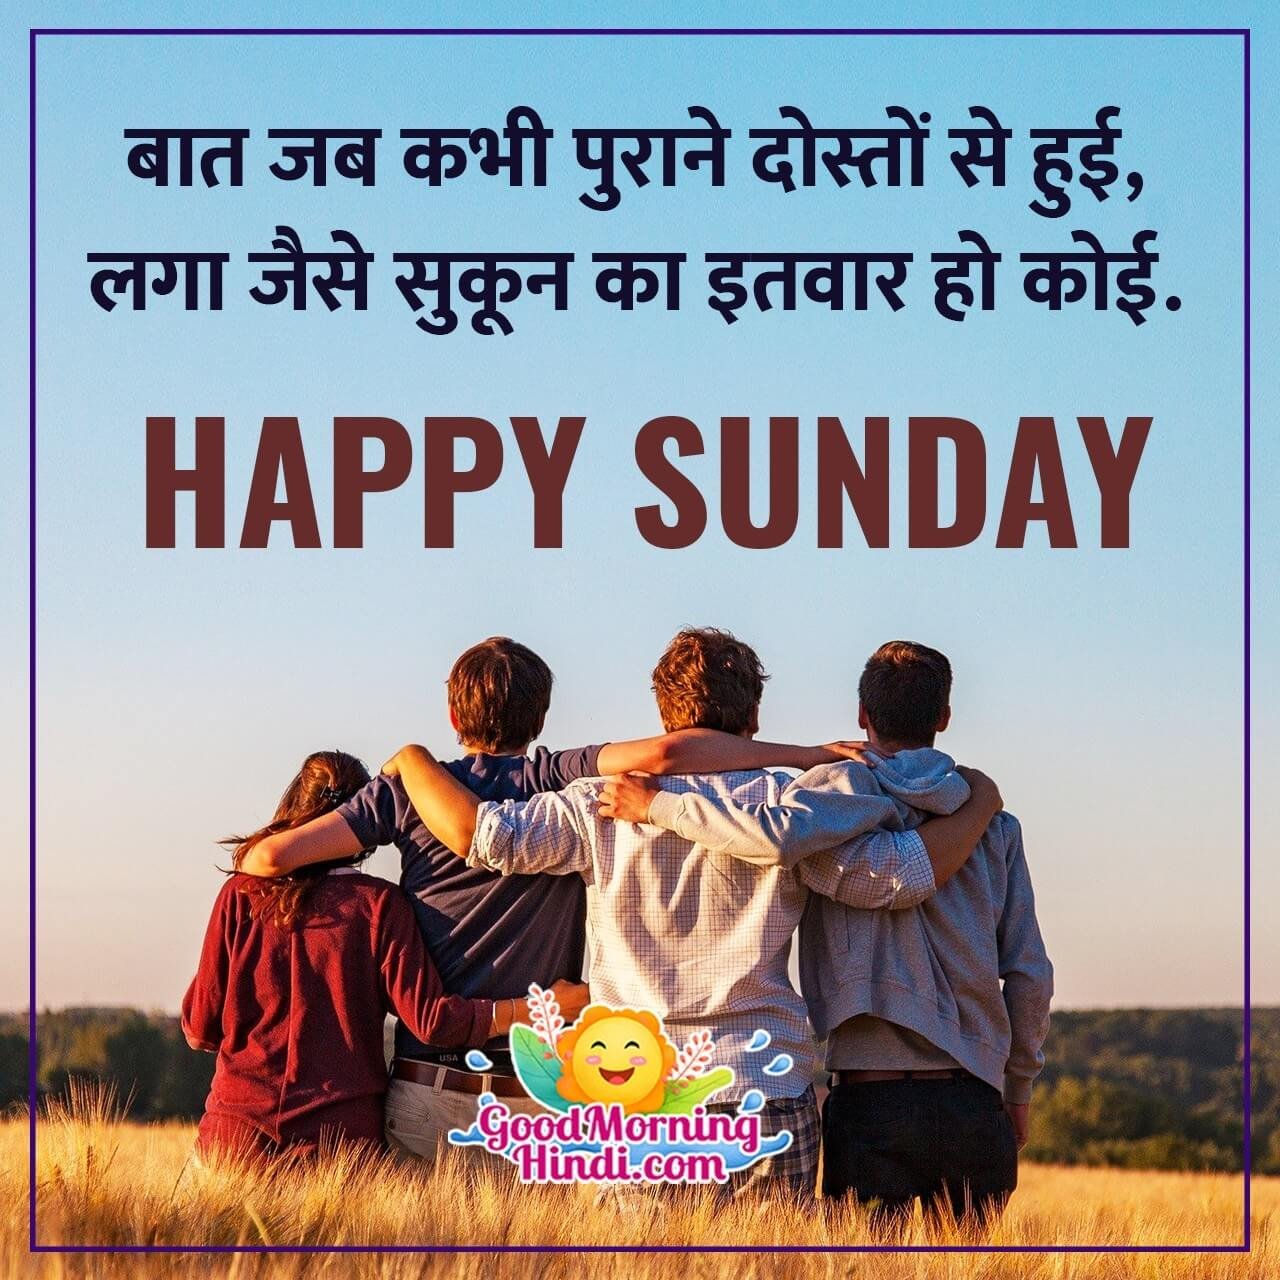 Happy Sunday Shayari Images In Hindi